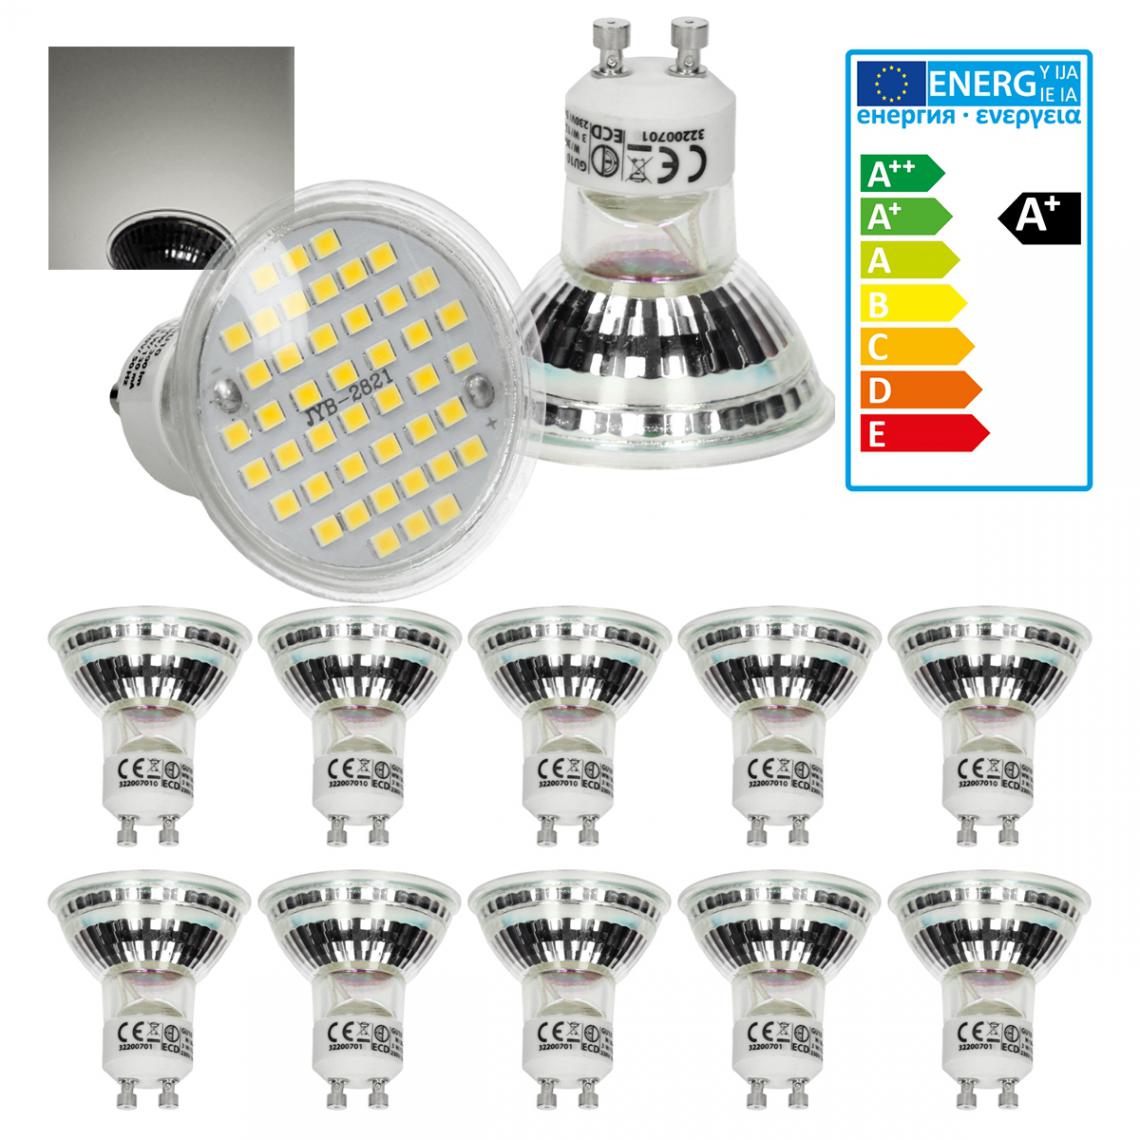 Ecd Germany - ECD Germany 10 x LED GU10 44SMD Spot 3W - Lampe à LED 20W - en verre - 251 lumens - Blanc neutre 4000K - Spot à encastrer - Ampoules LED